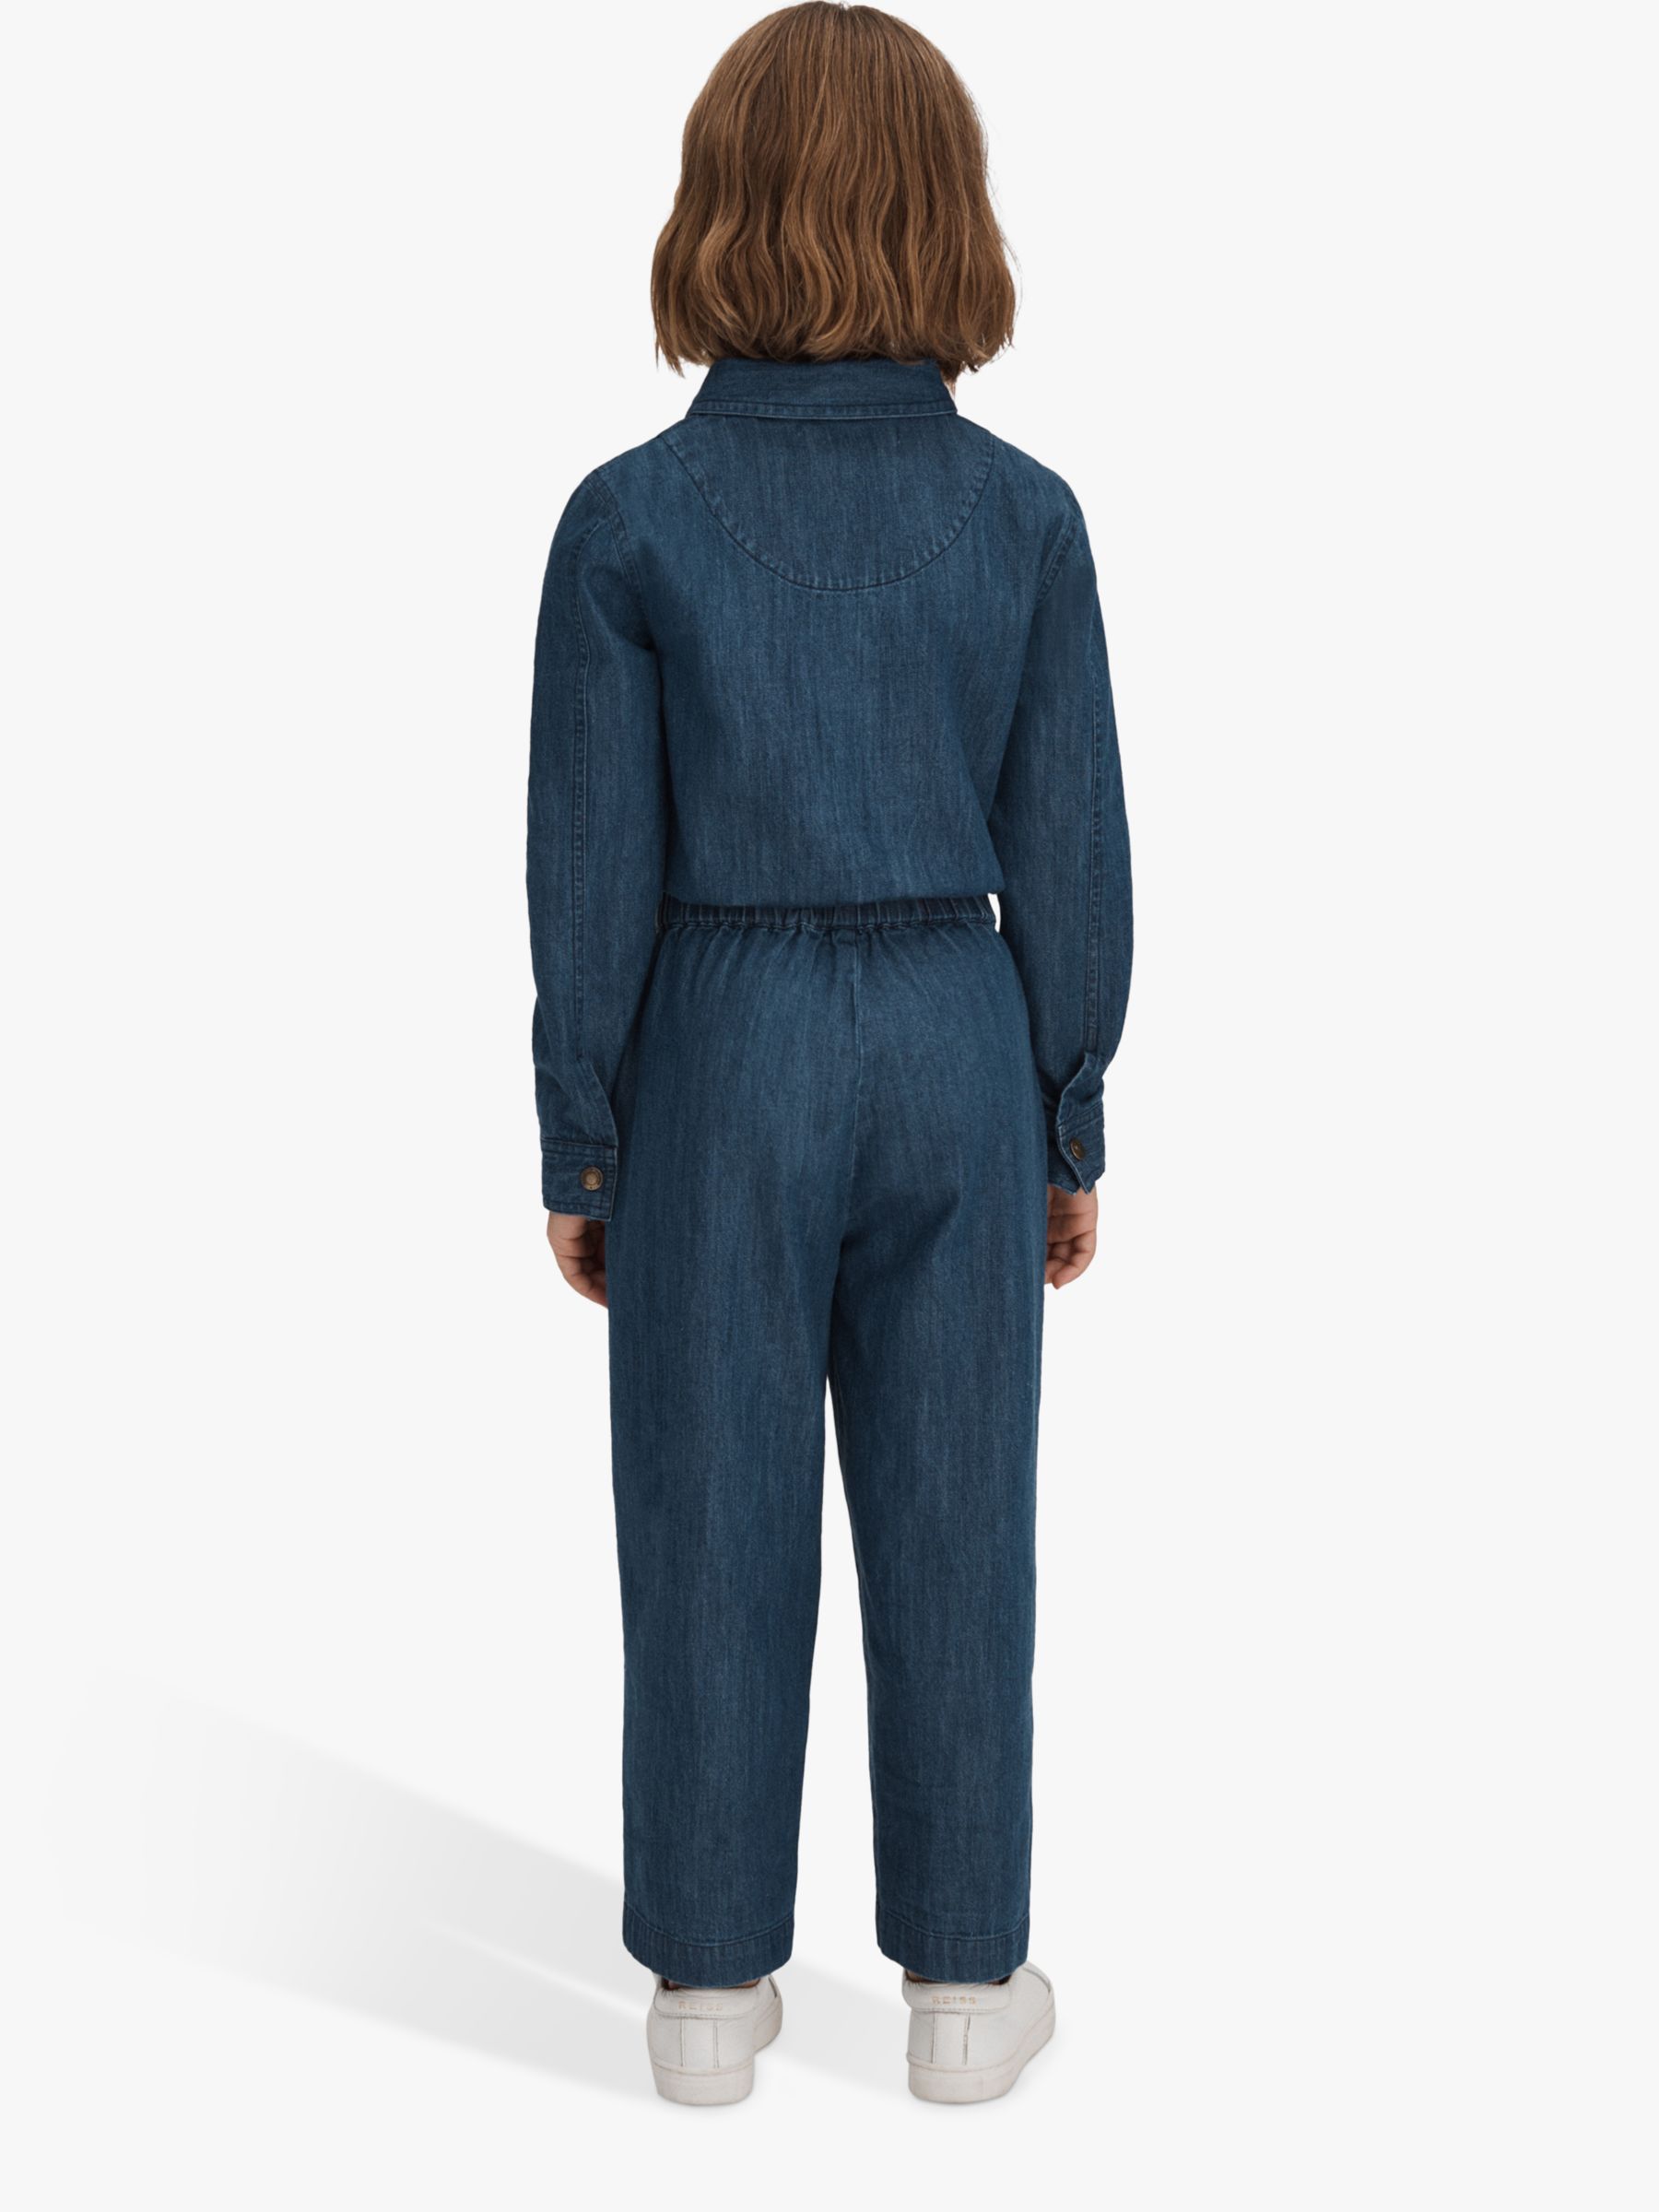 Reiss Kids' Marnie Elasticated Embellished Denim Jumpsuit, Blue, 9-10 years